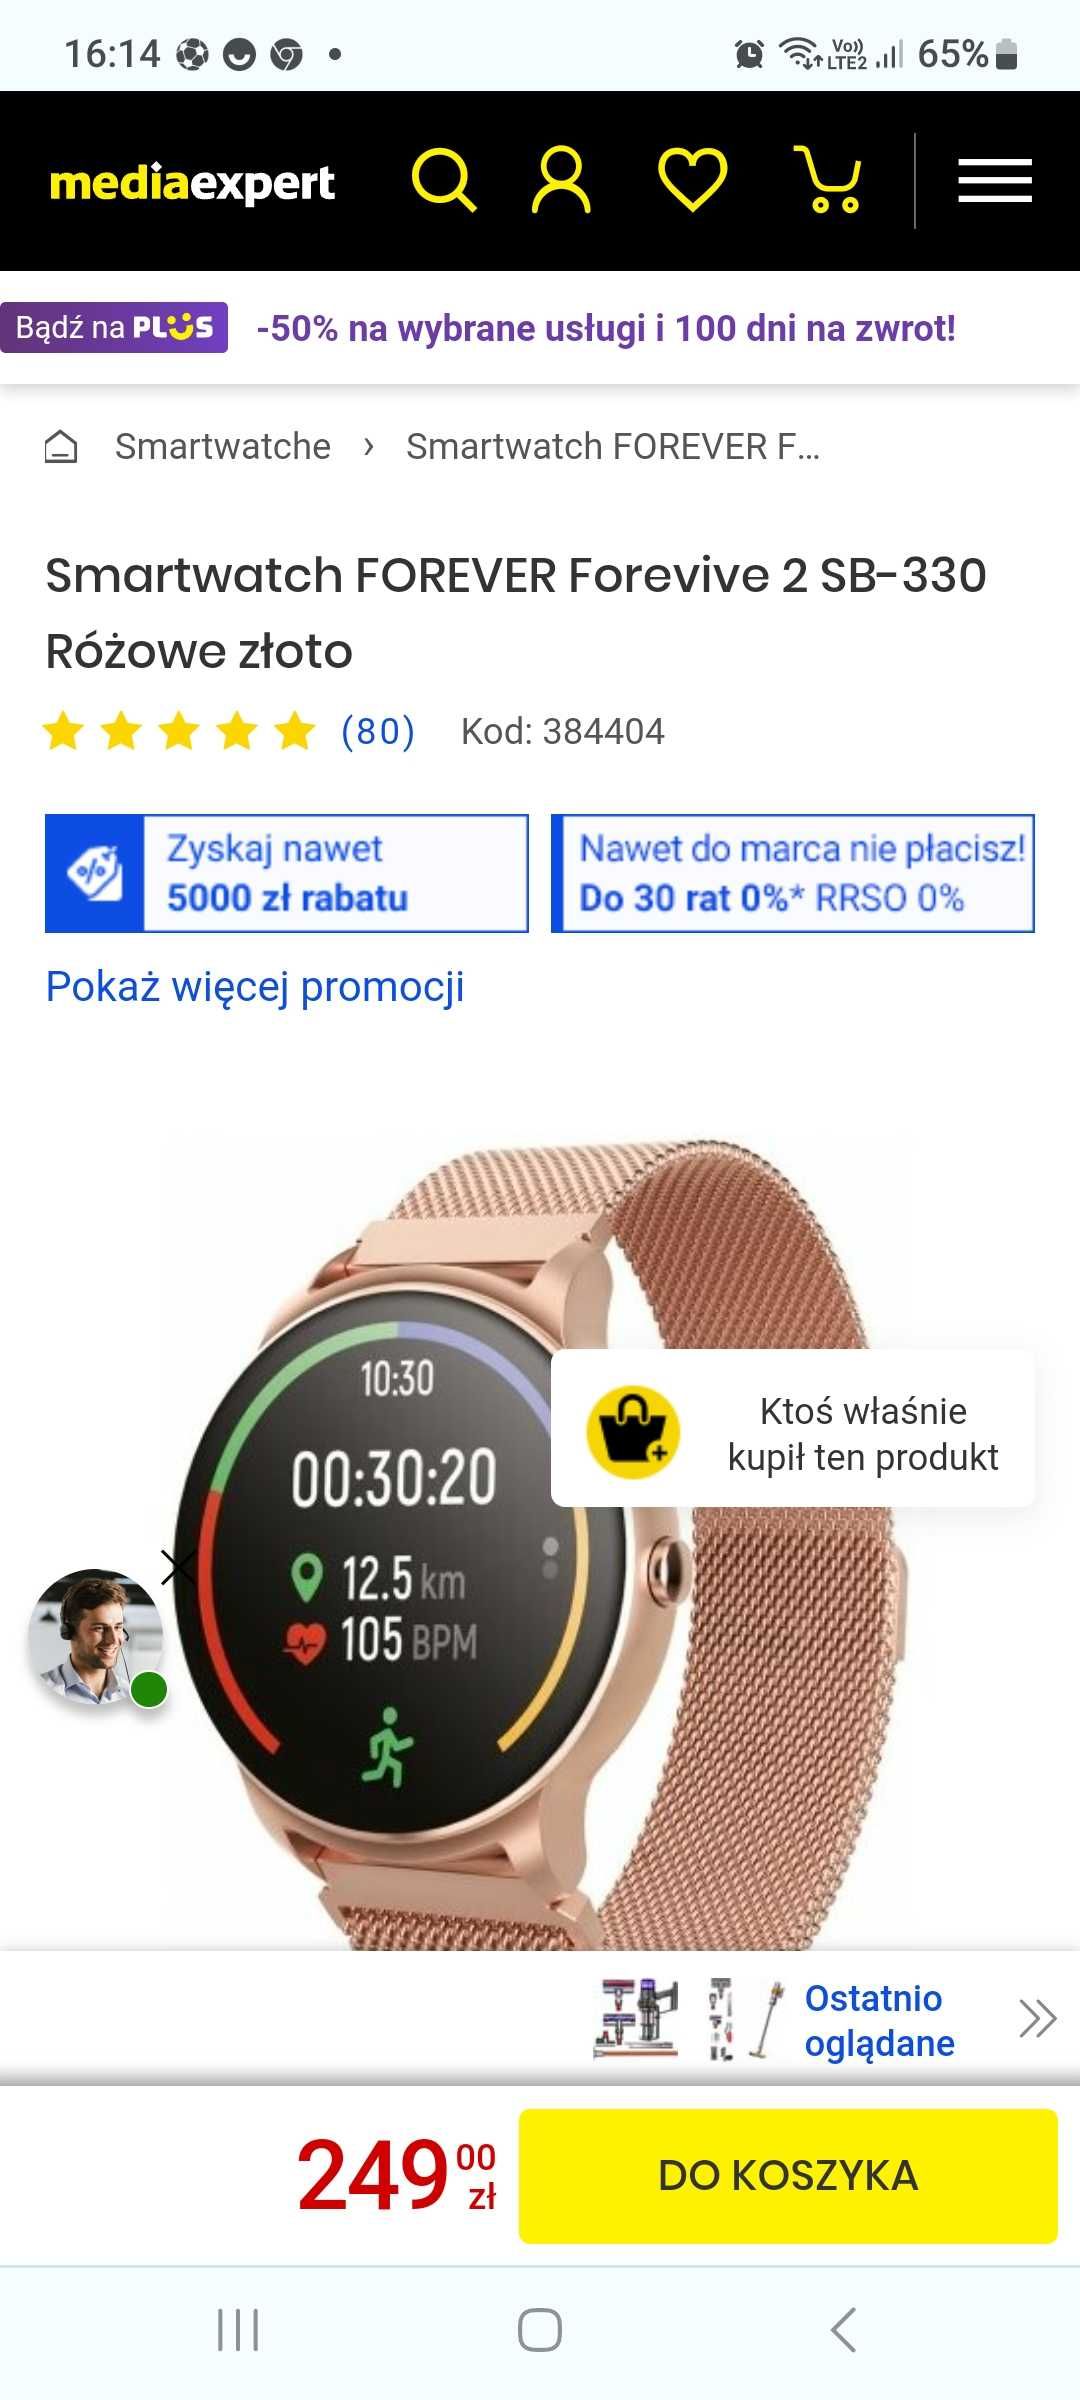 Smartwatch SB330